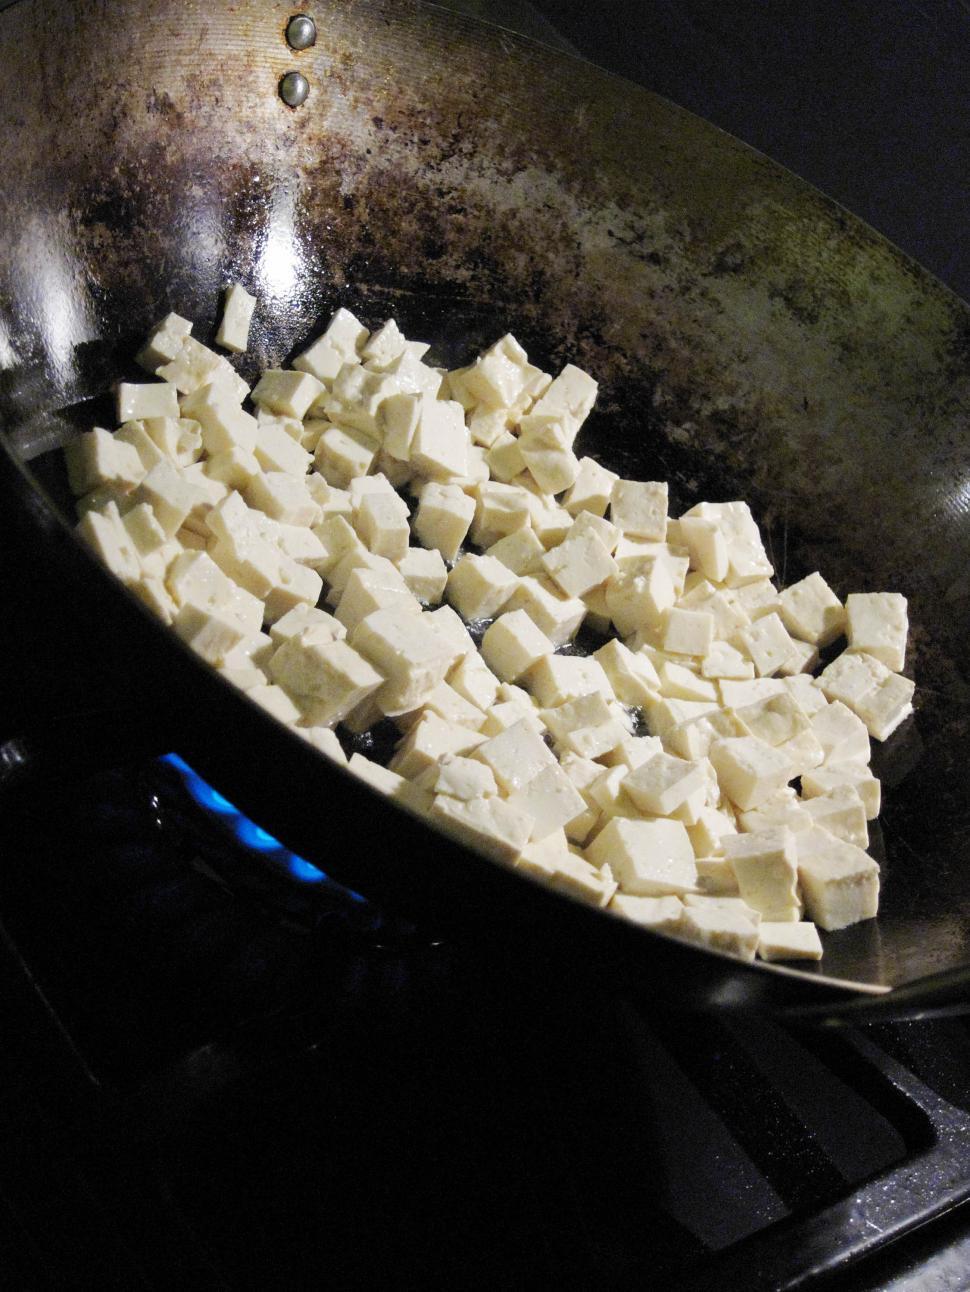 Free Image of Tofu in Wok 